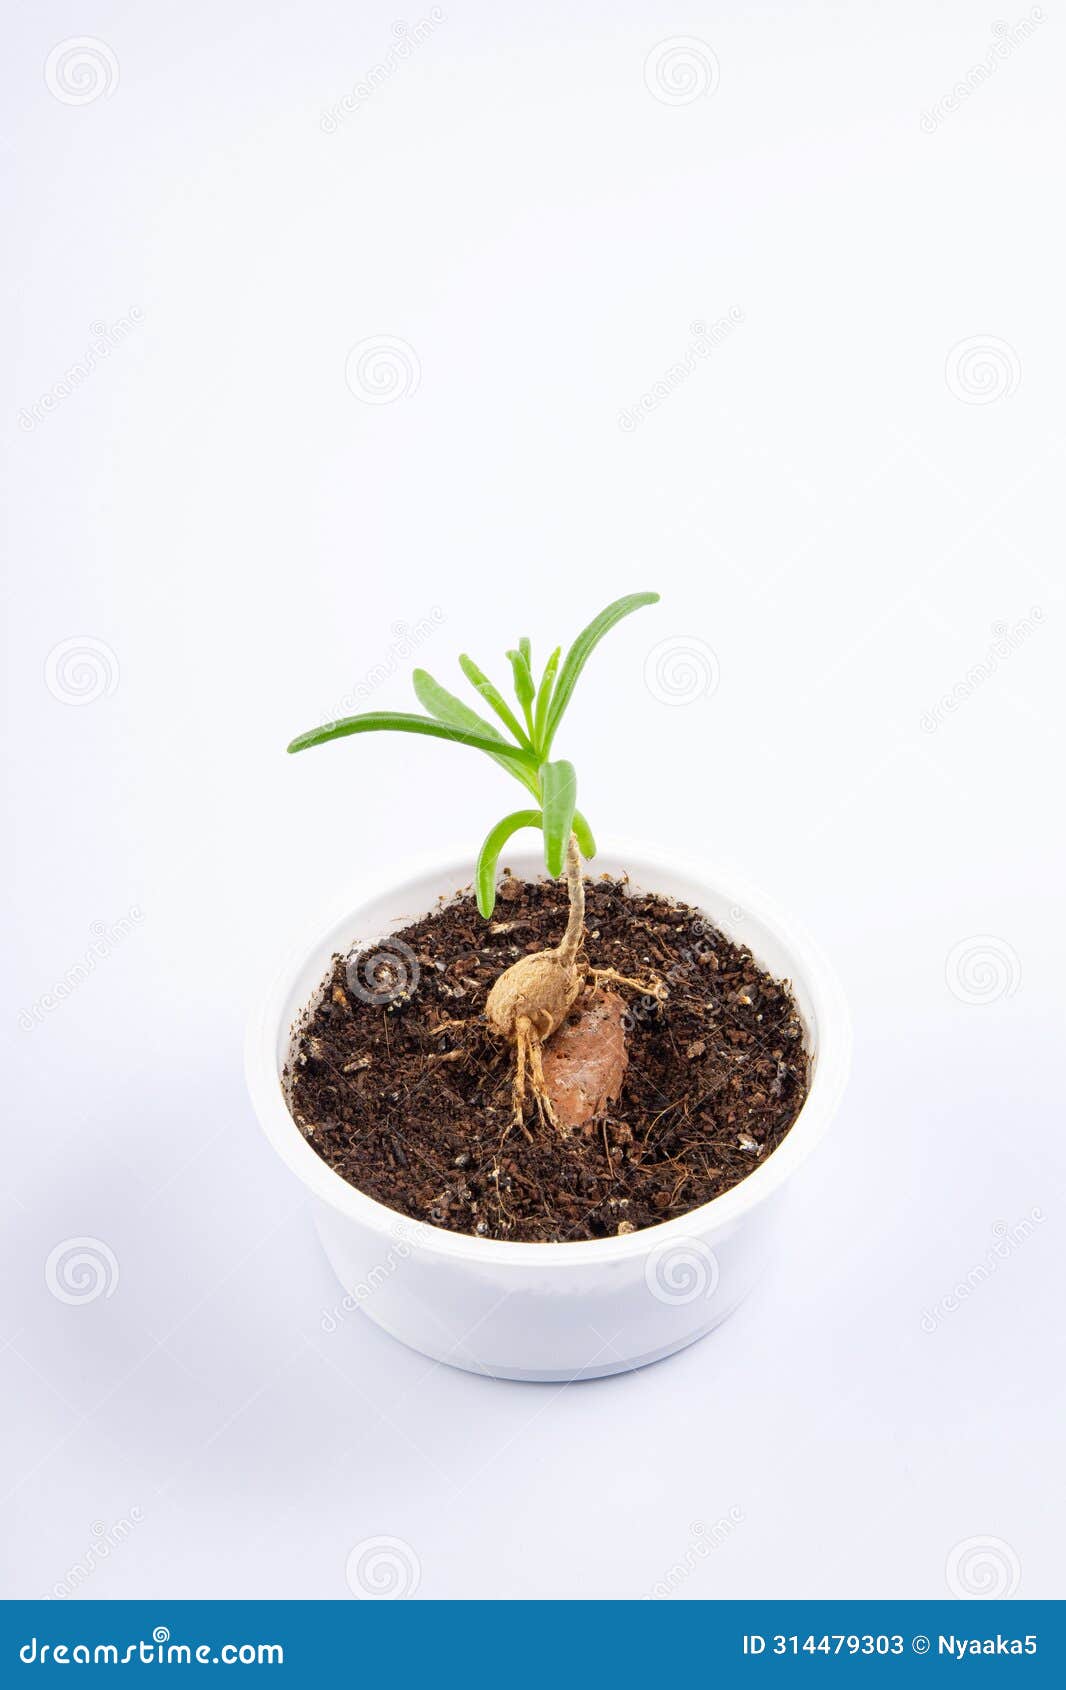 young plant mestoklema (macrorhiza) - dwarf caudex succulent, in a small white bowl.